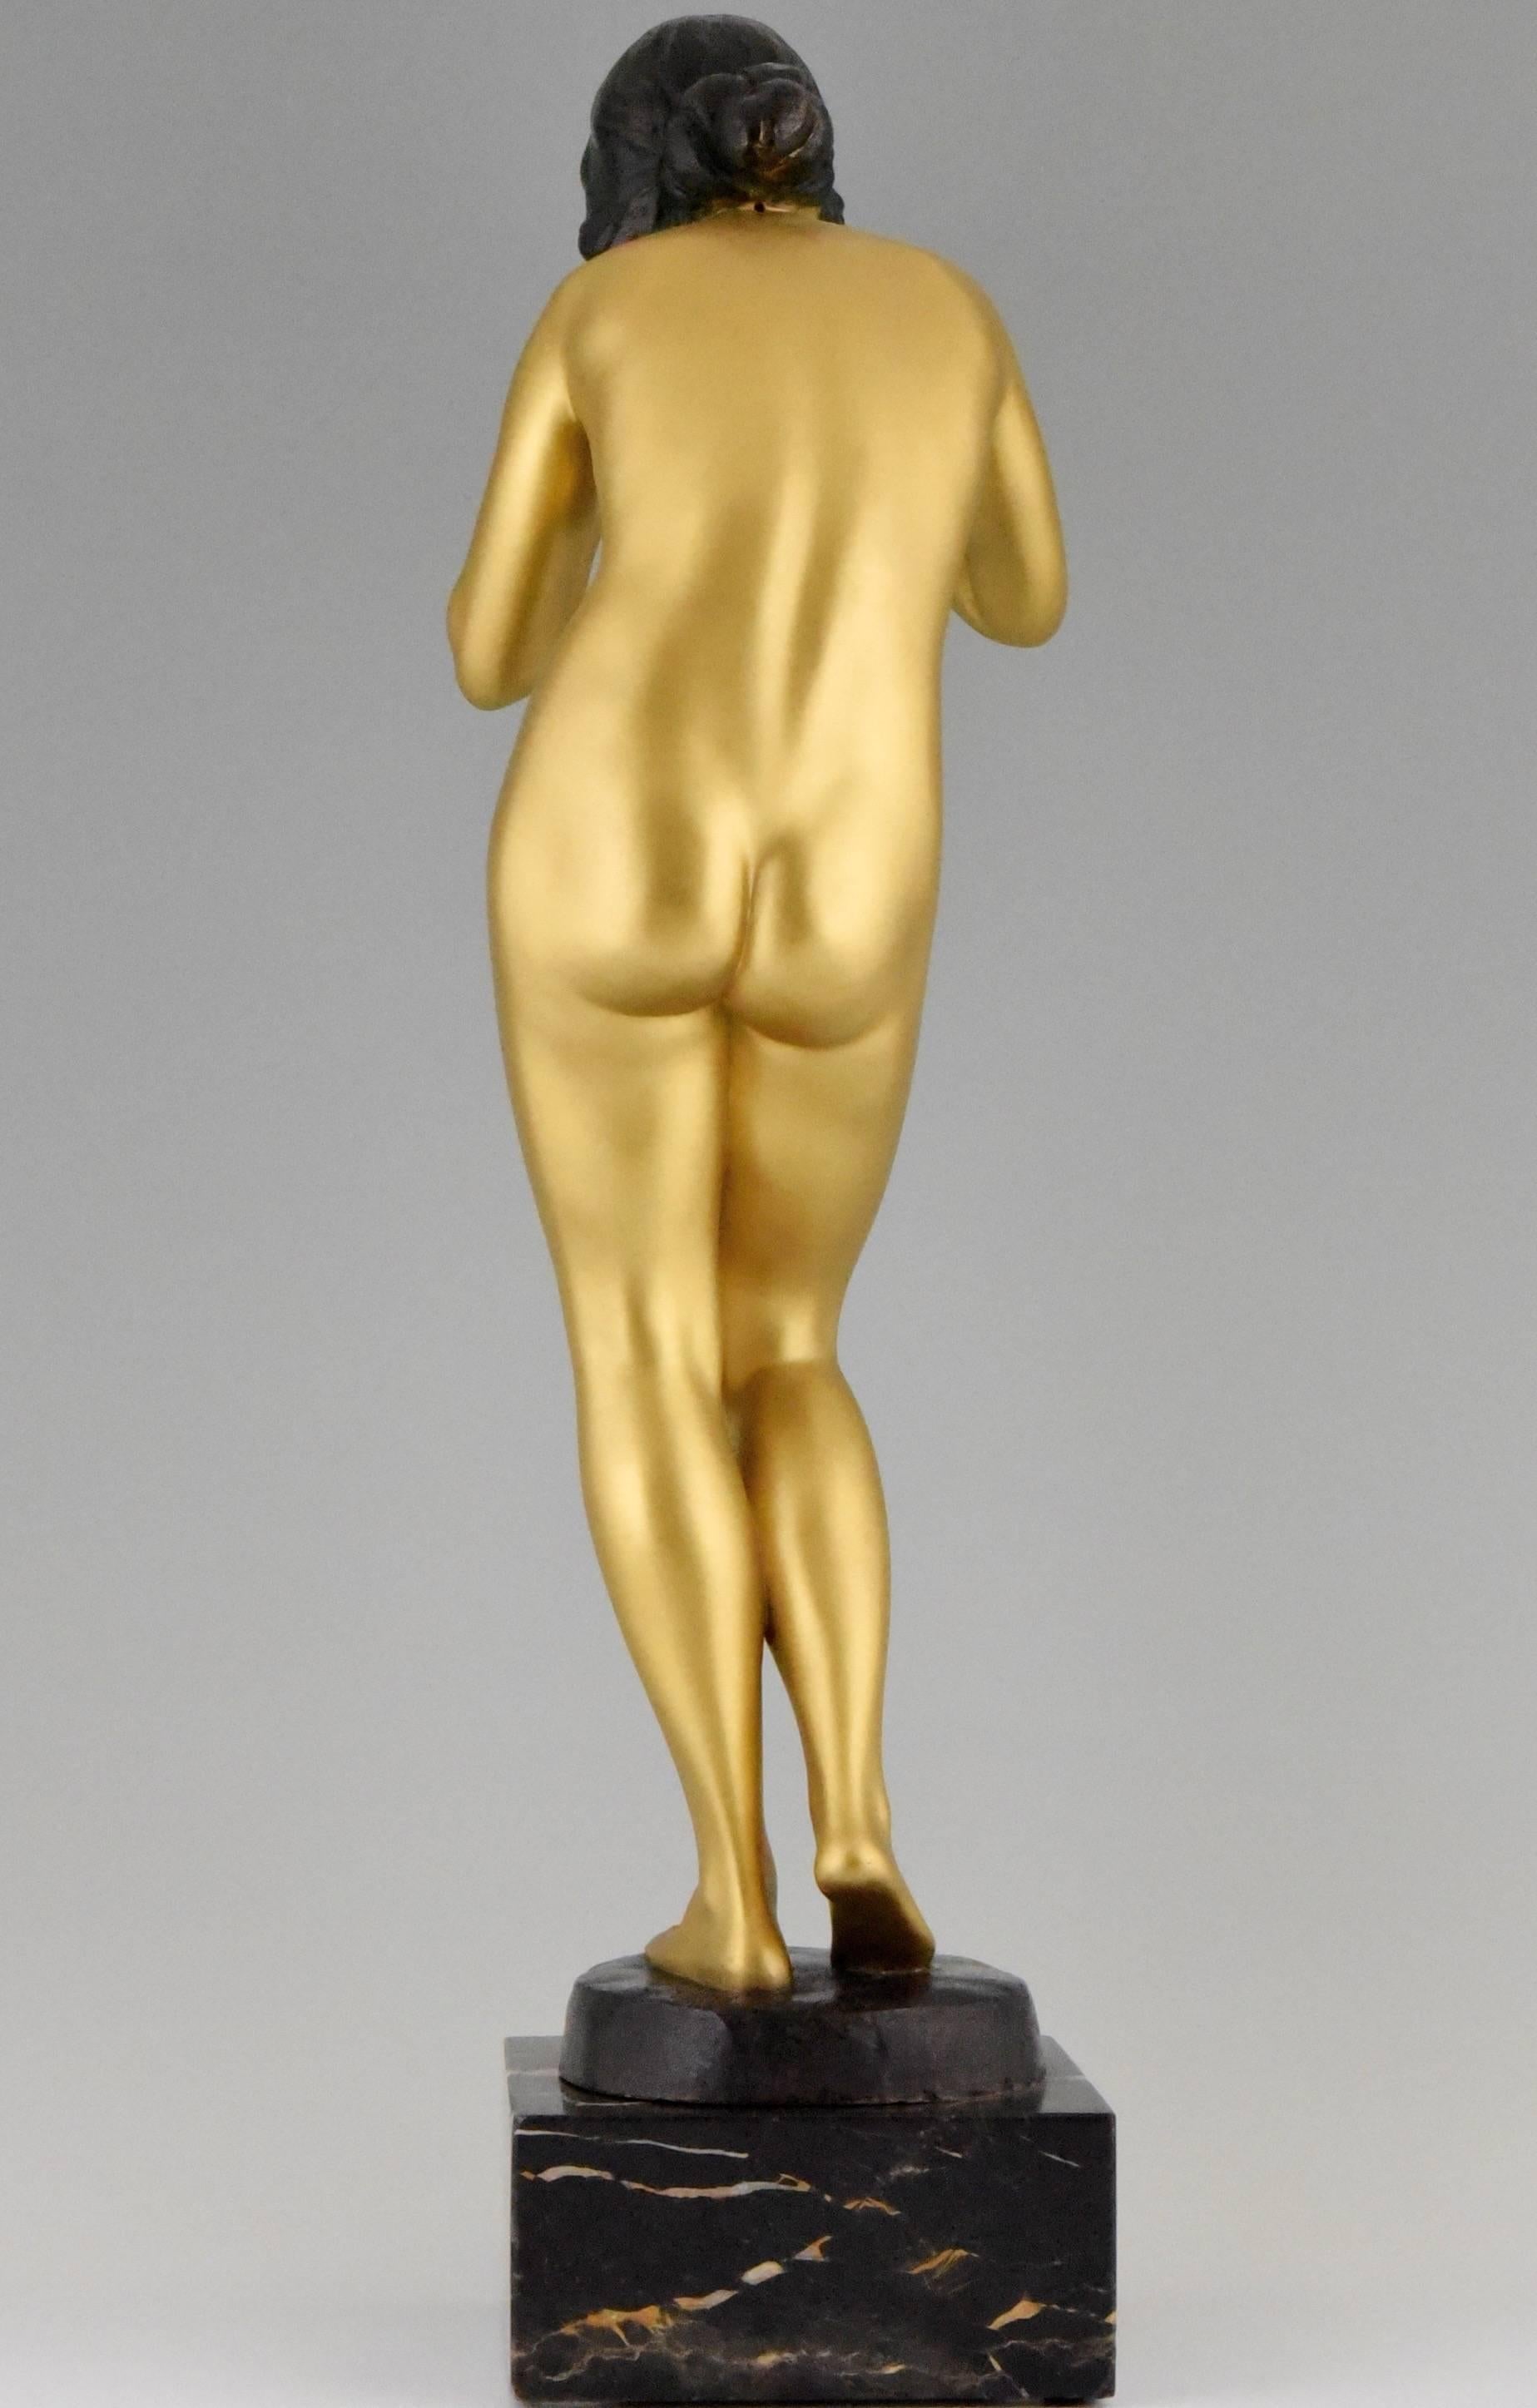 20th Century Art Nouveau gilt bronze sculpture of a nude by Victor Seifert, 1900 Germany